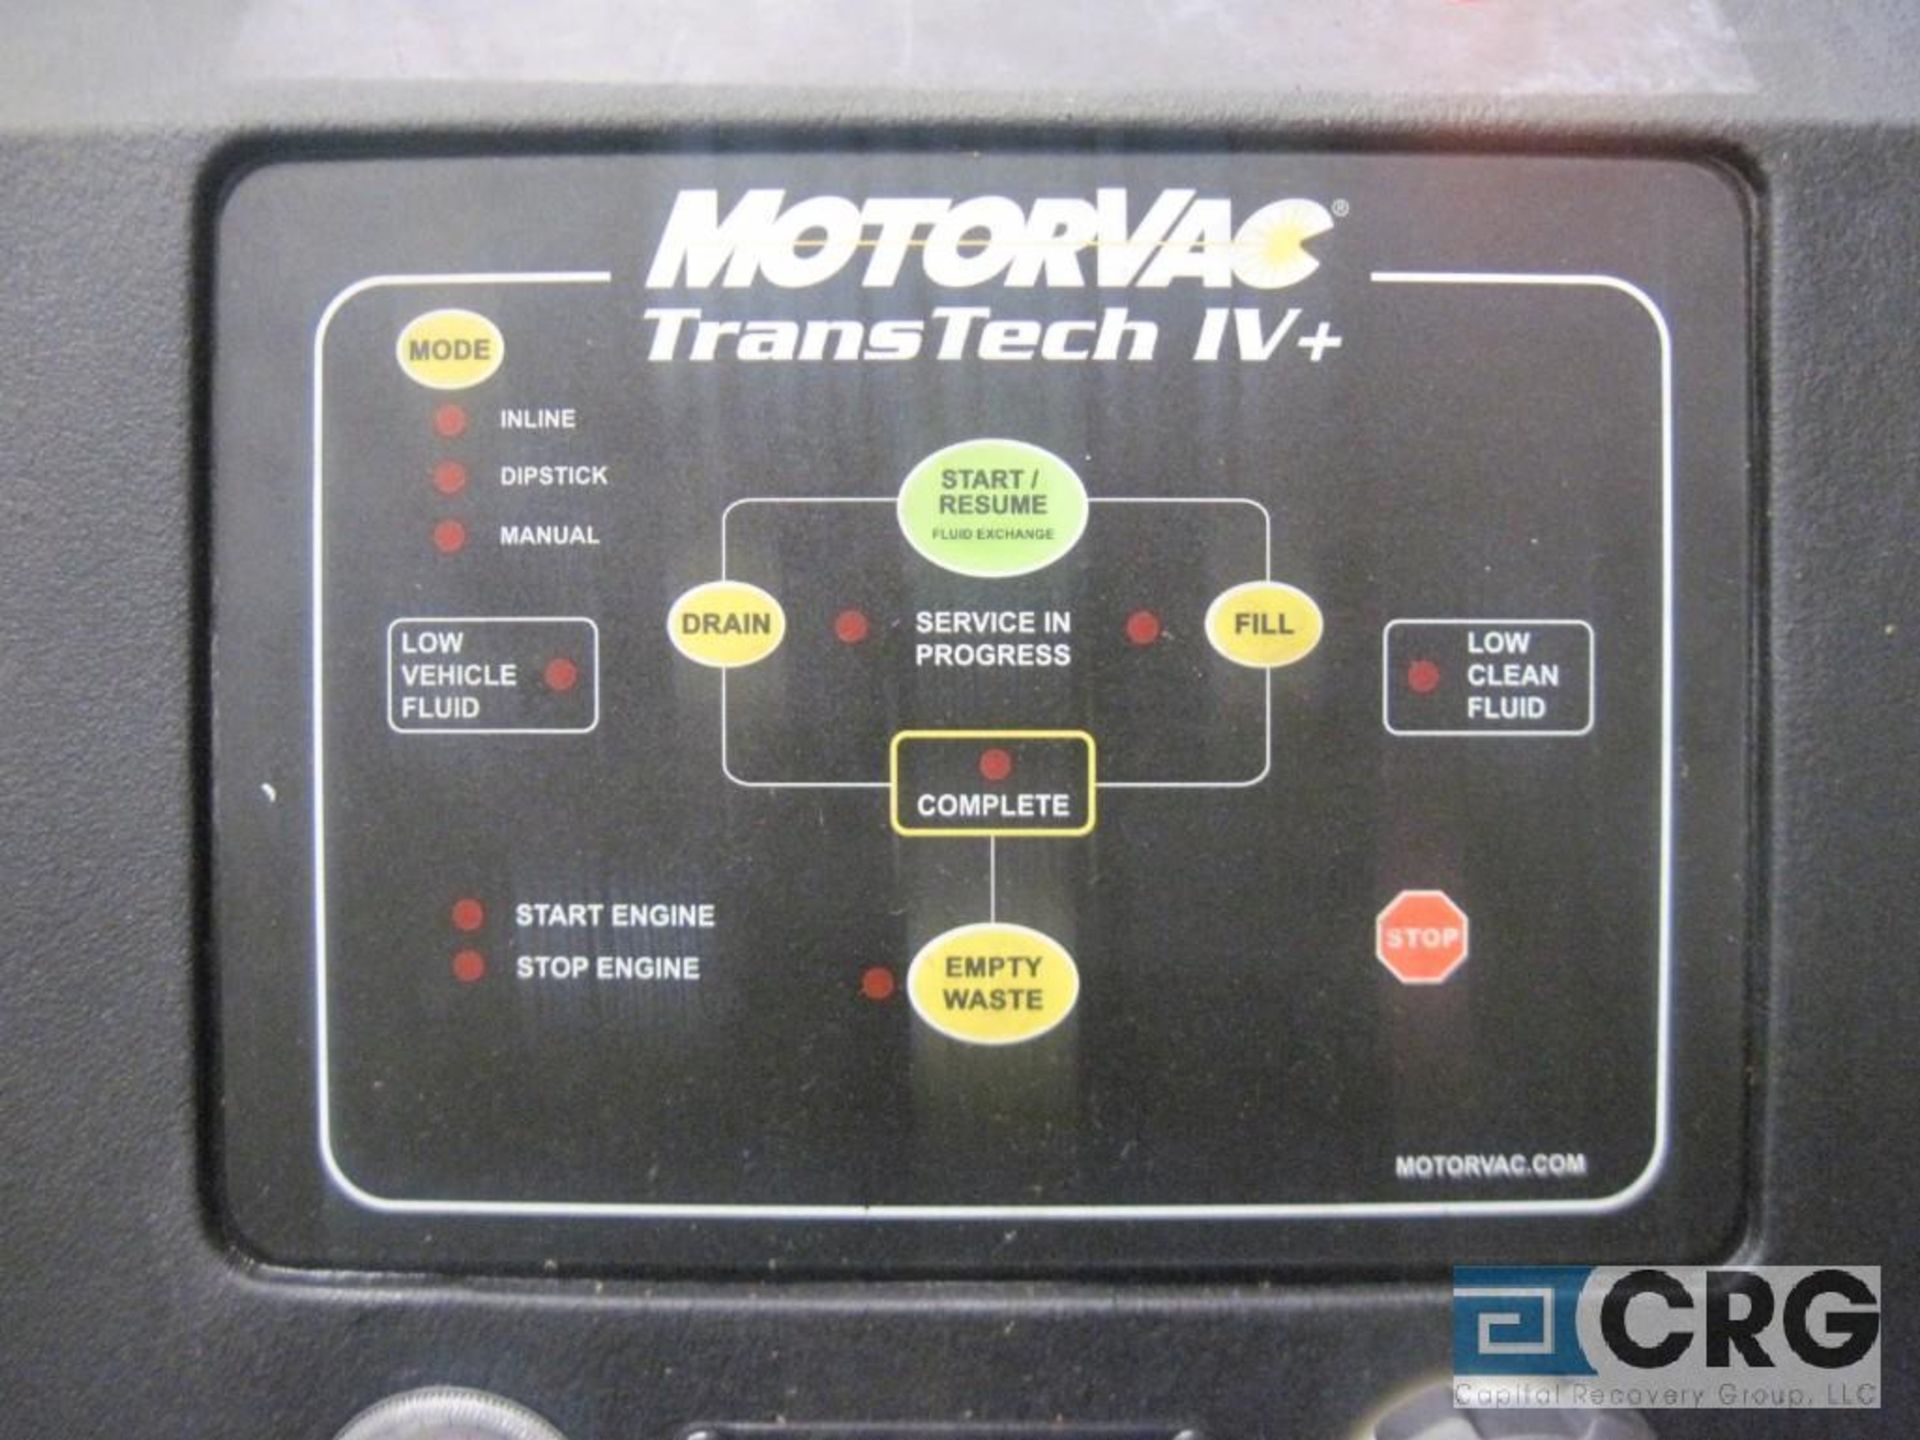 Motor Vac Trans Tech IV+ transmission flushing system (mobile), s/n 411 - Image 3 of 5